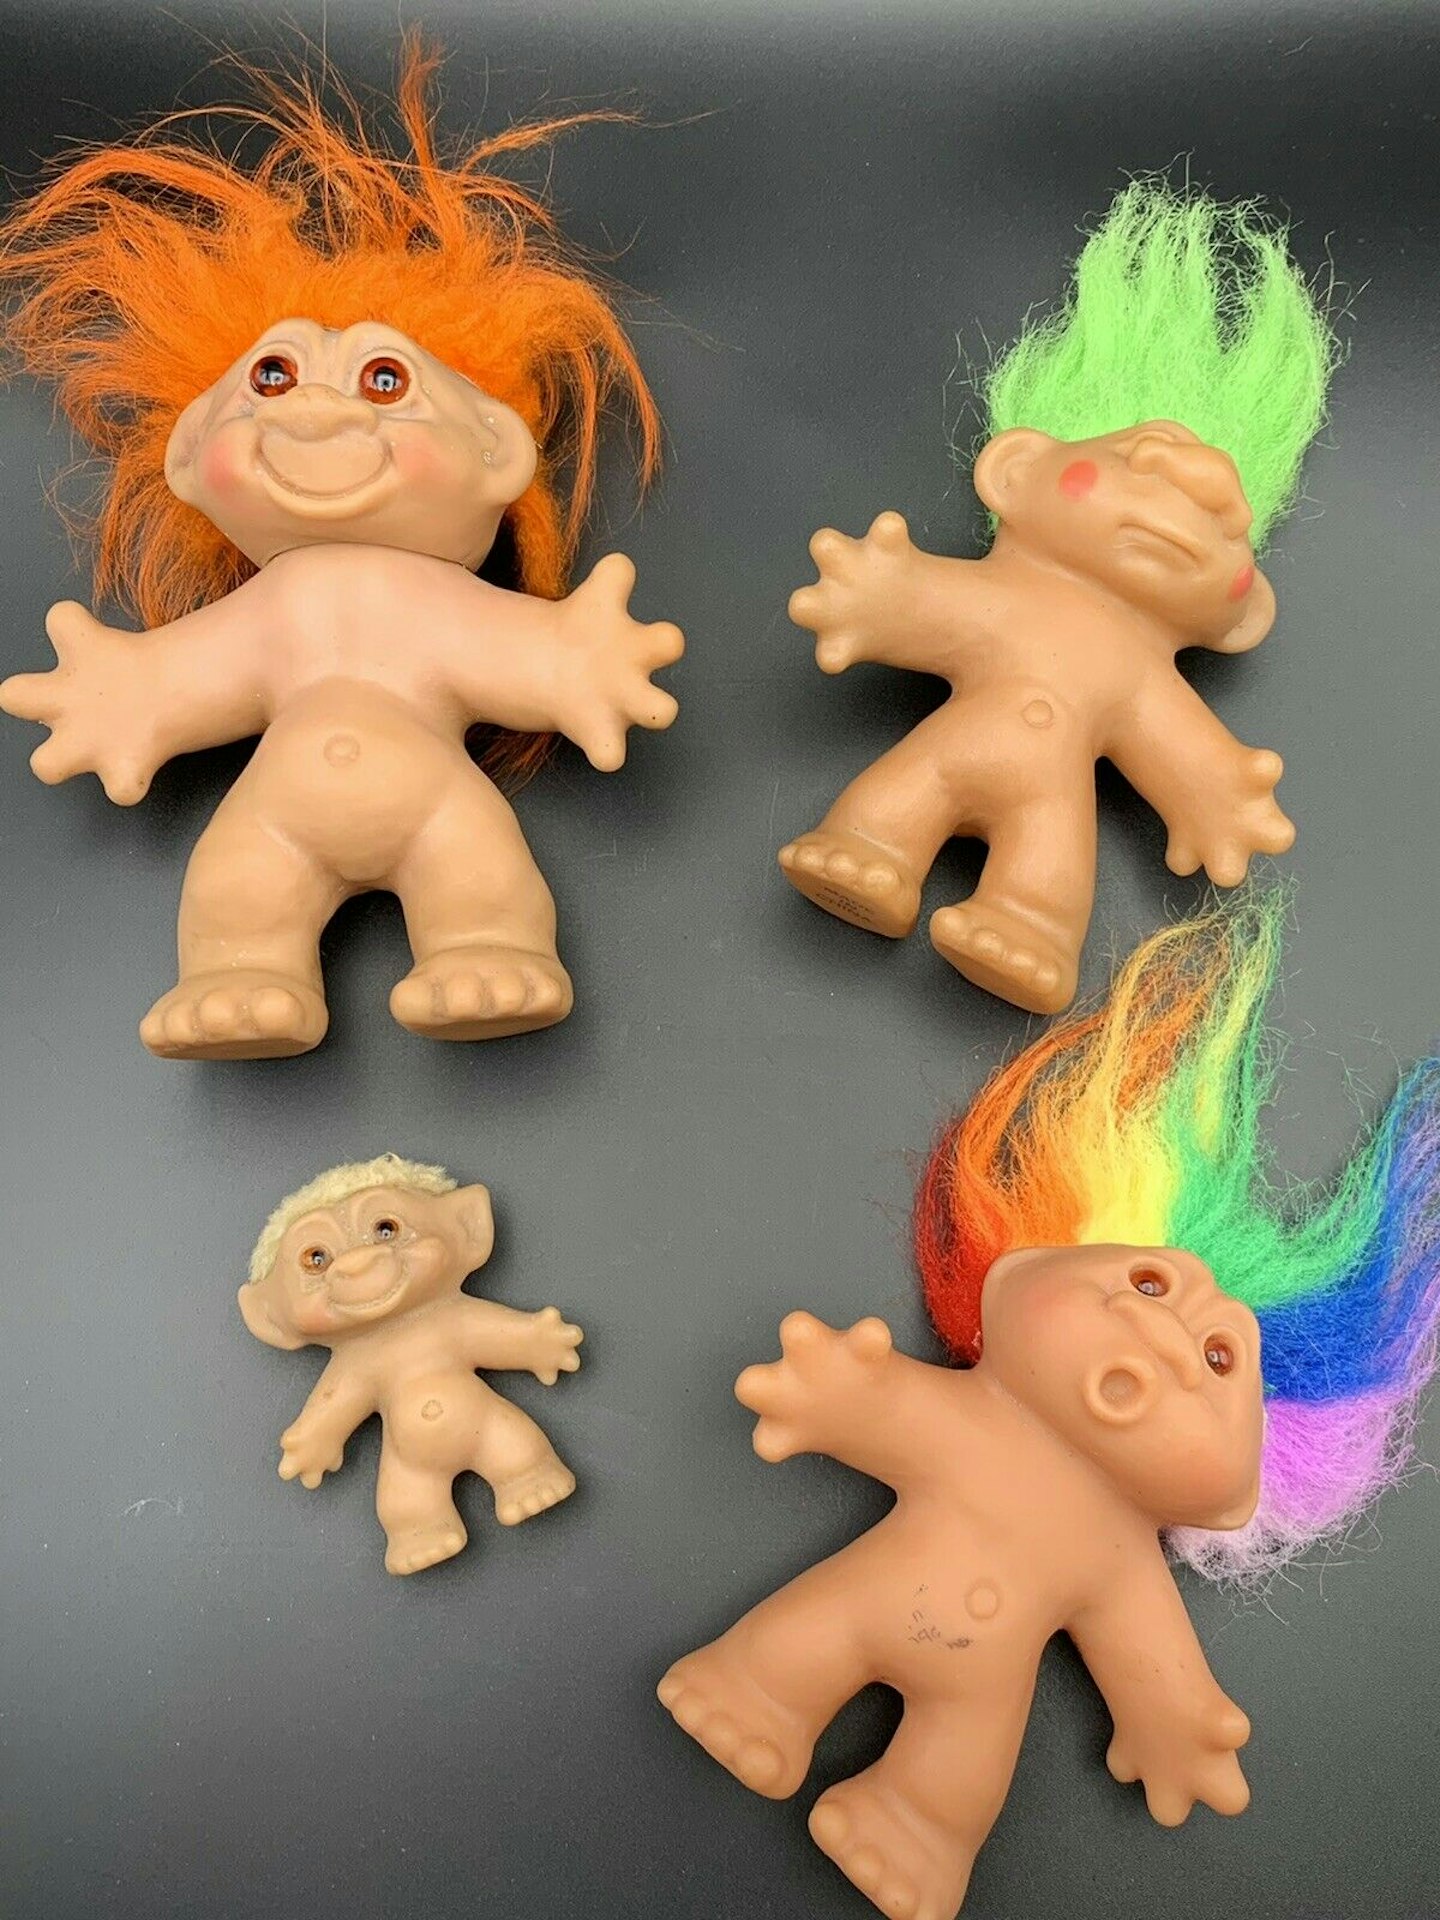 70s toys: Trolls